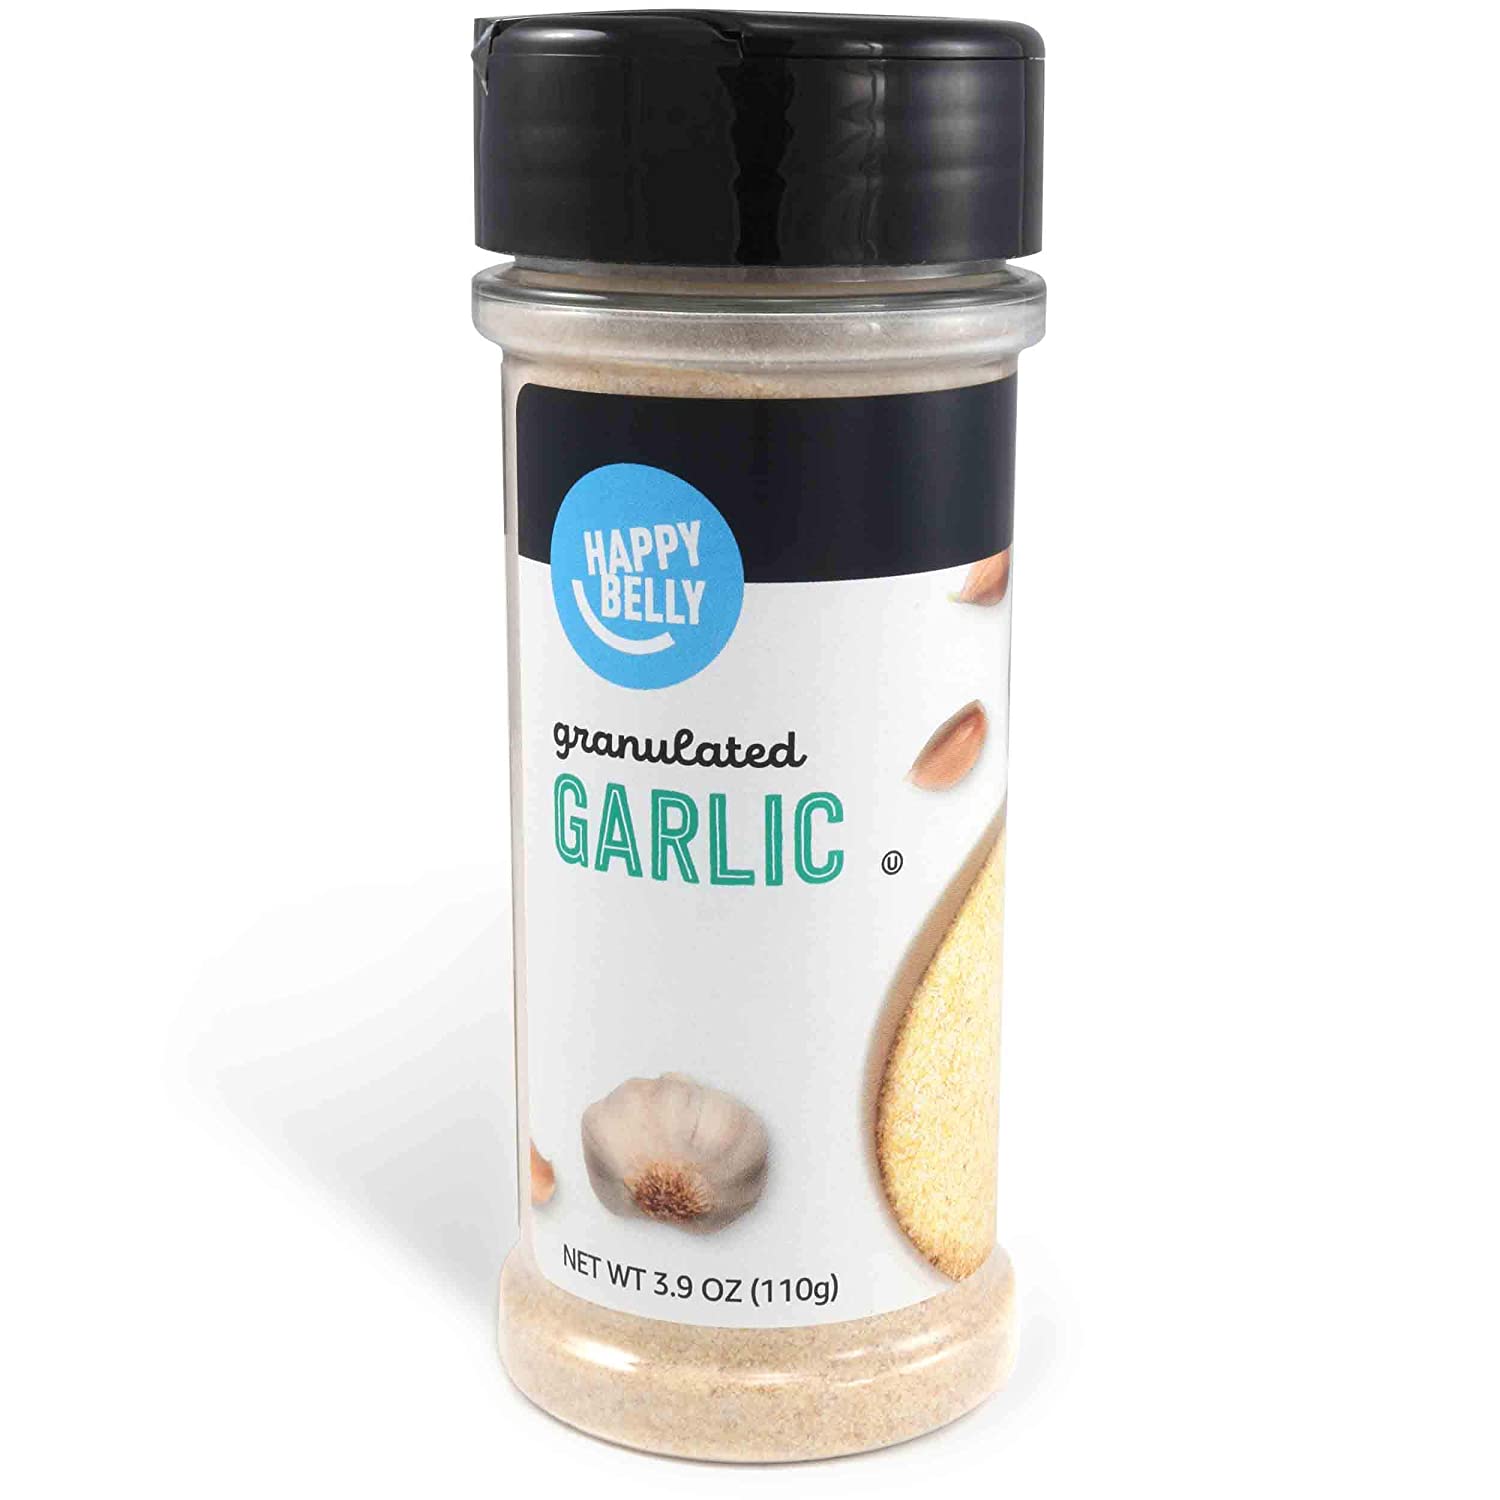 3.9-Oz. Amazon Brand Happy Belly Granulated Garlic $1.57 + Free S&H w/ Prime or $25+